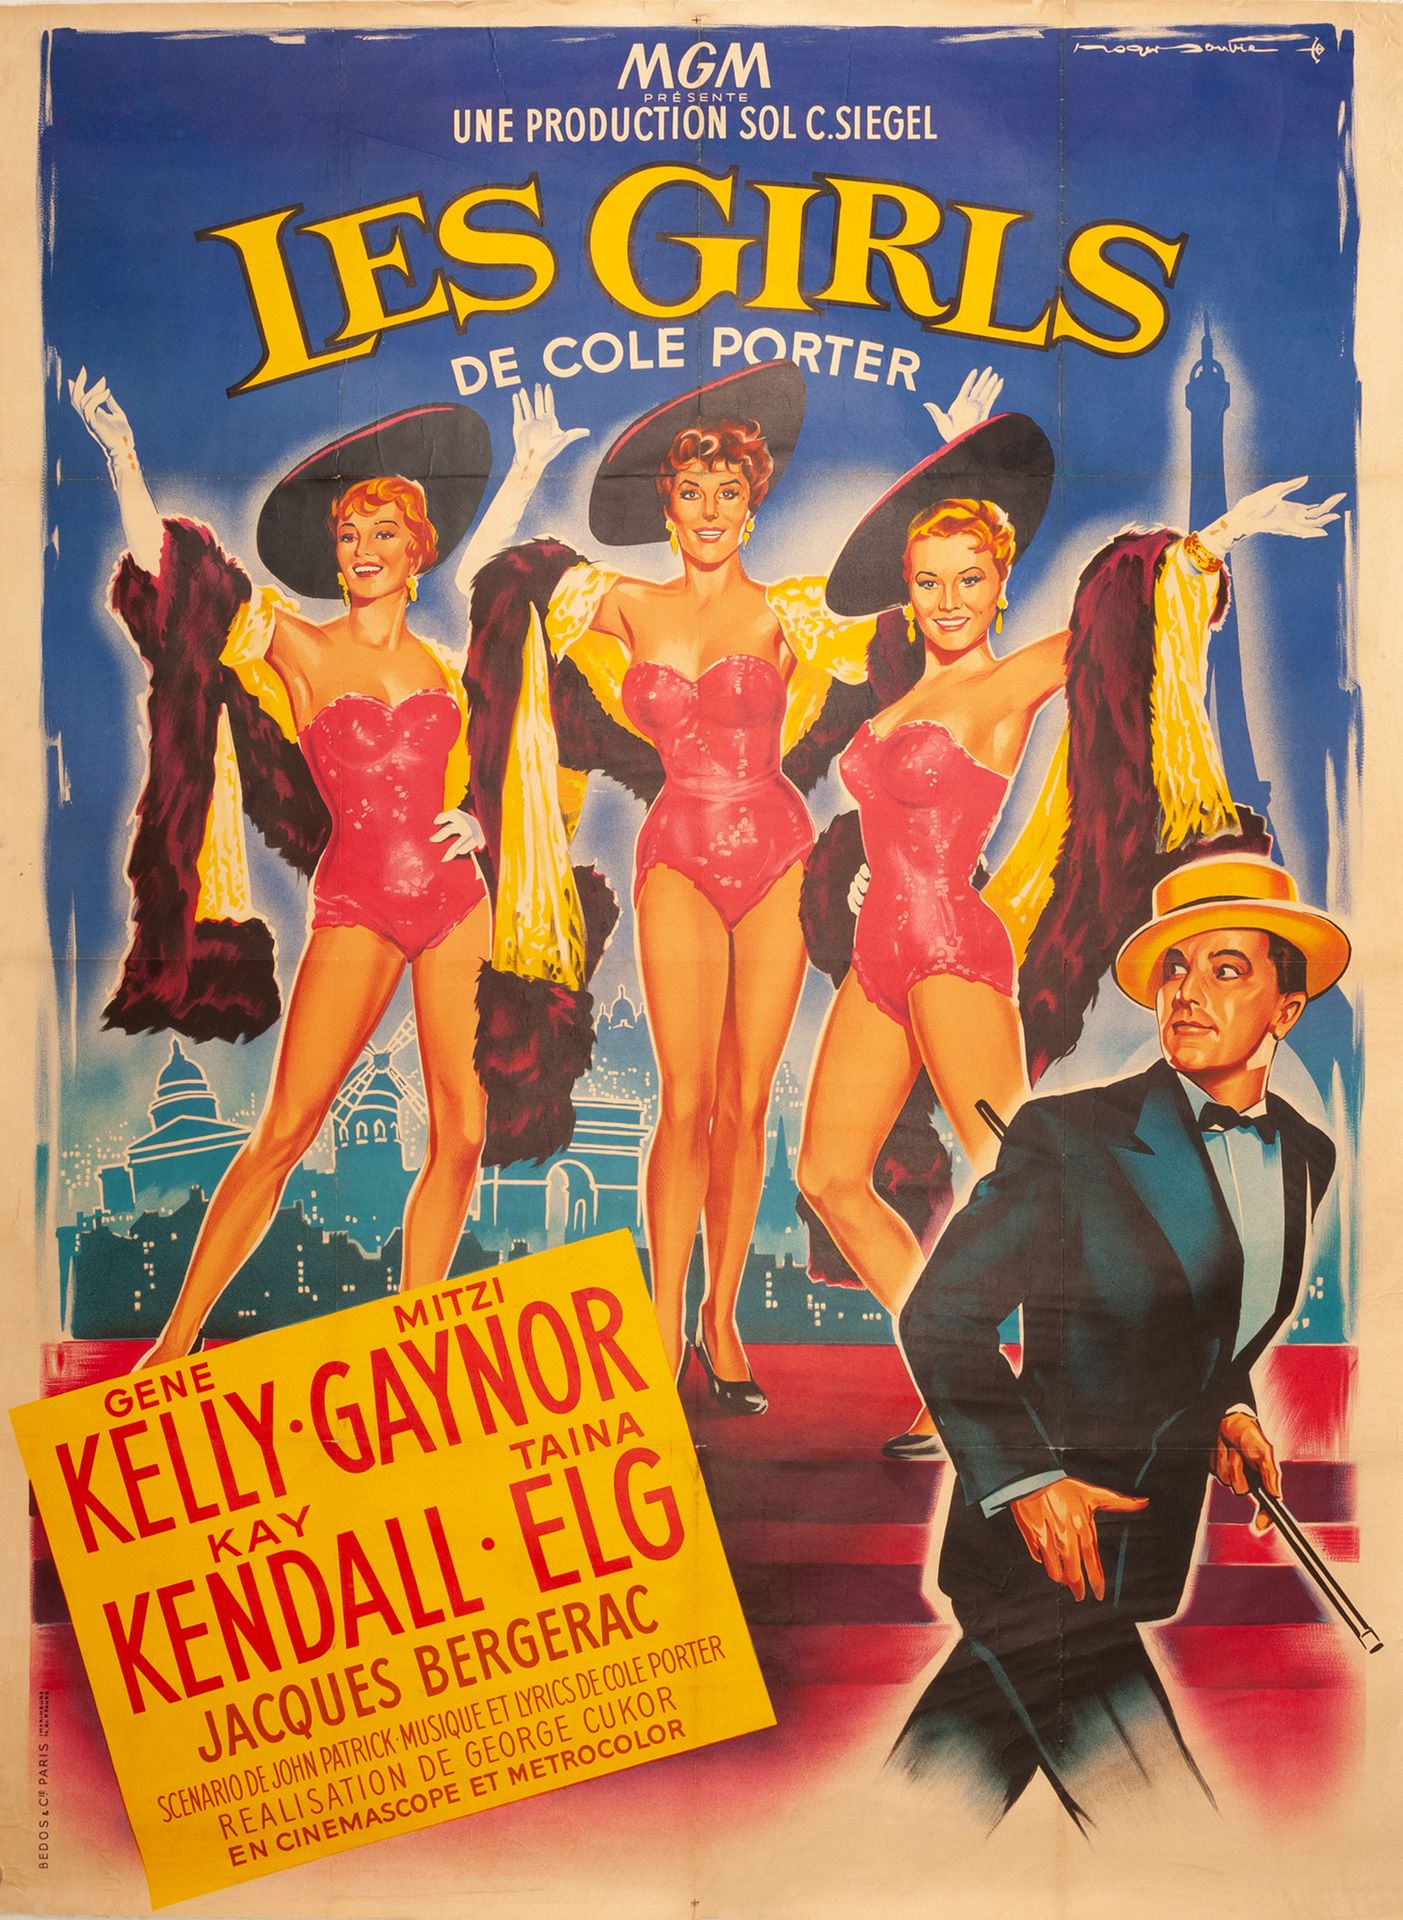 Null 乔治-库克的《女孩》。1957年。
120 x 160 cm。法国海报。罗杰-苏比Imp. Bedos & Cie.巴黎。
包裹。条件B-